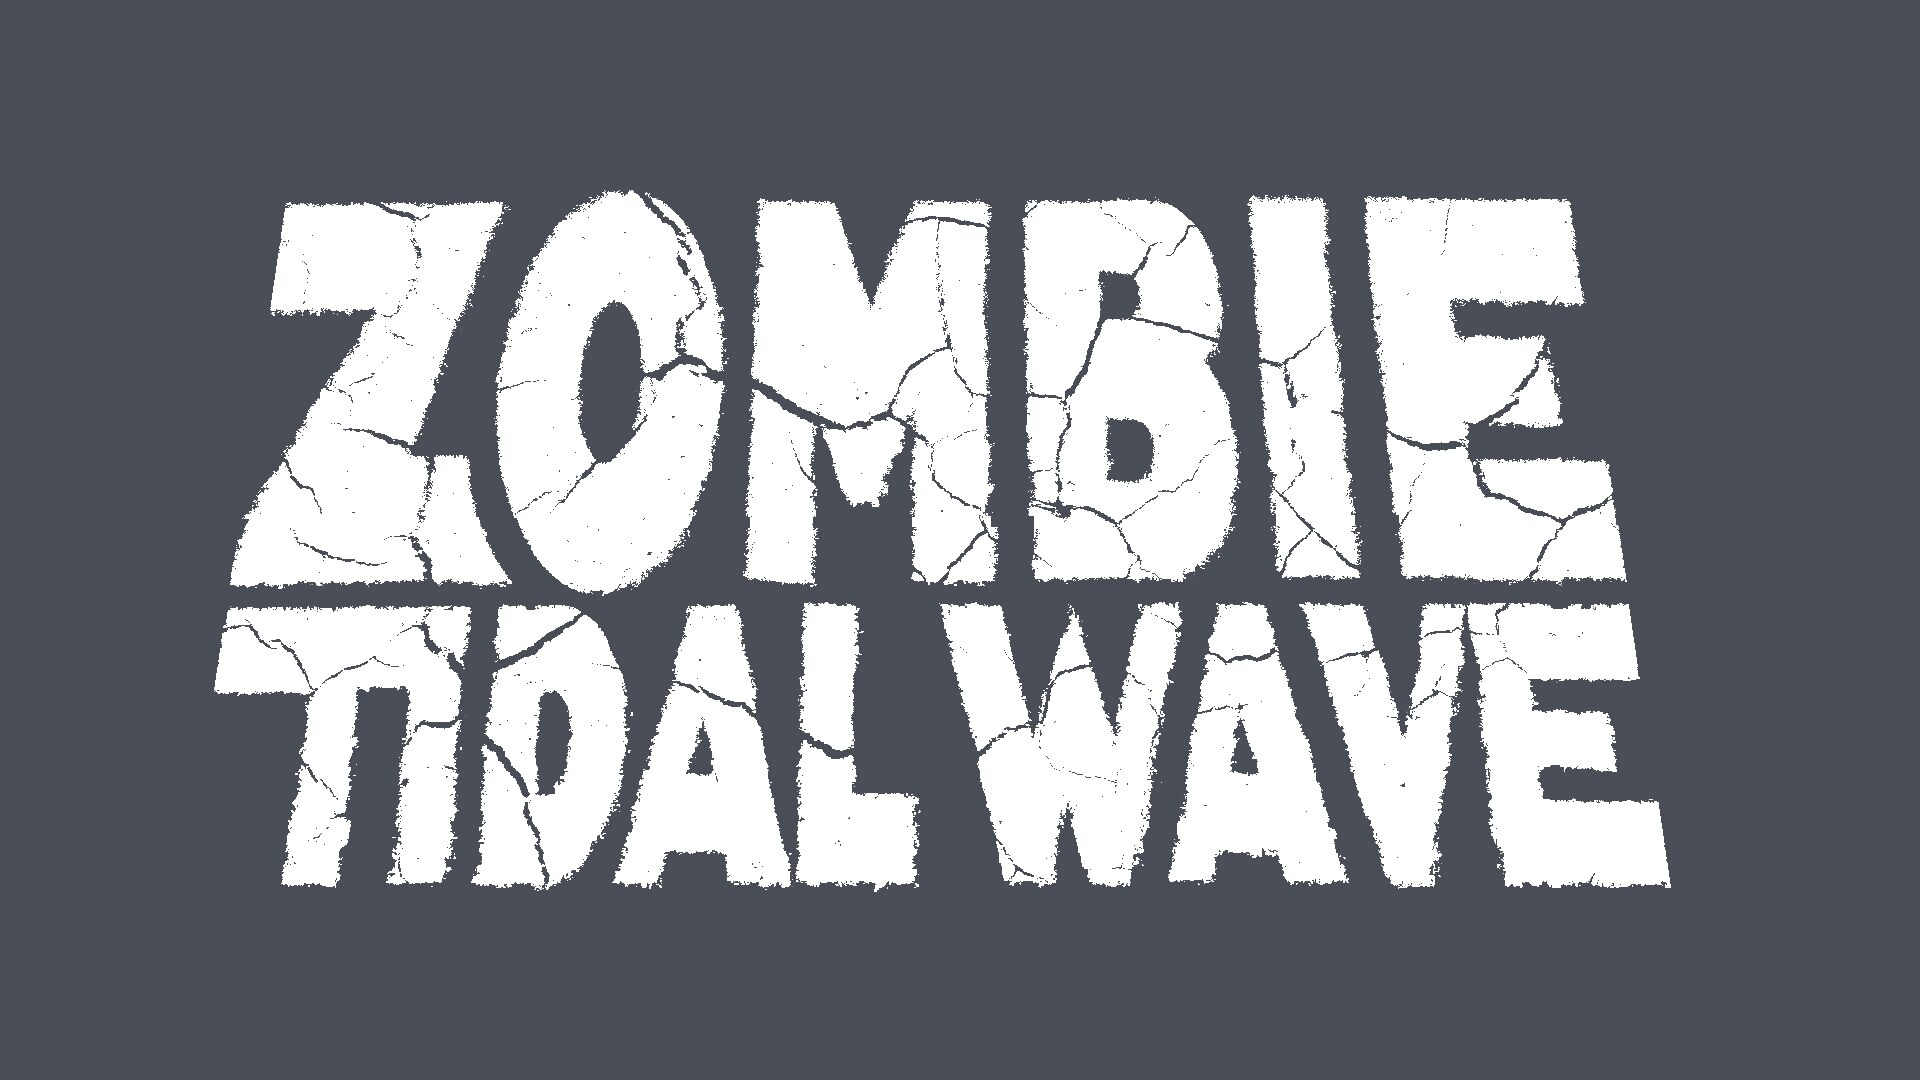 ZombieTidalWave-Logo-1920x1080.jpg (1920Ã—1080)